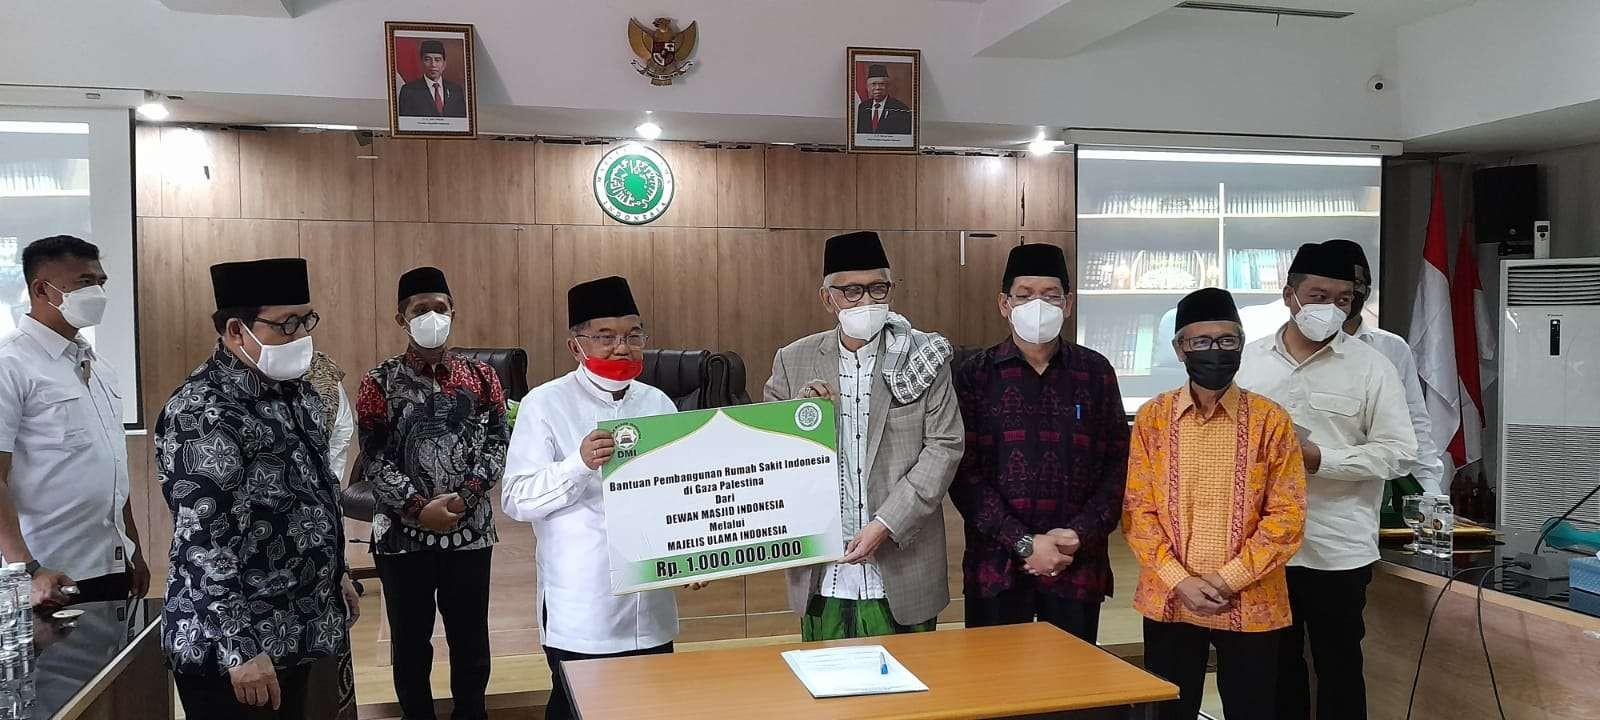 Ketua Umum DMI Jusuf Kalla didampingi Sekretaris DMI, Imam Addaruquthni menyerahkan langsung bantuan tersebut kepada MUI, diterima langsung Ketua Umum MUI KH Miftachul Akhyar di Jakarta. (Foto: Istimewa).